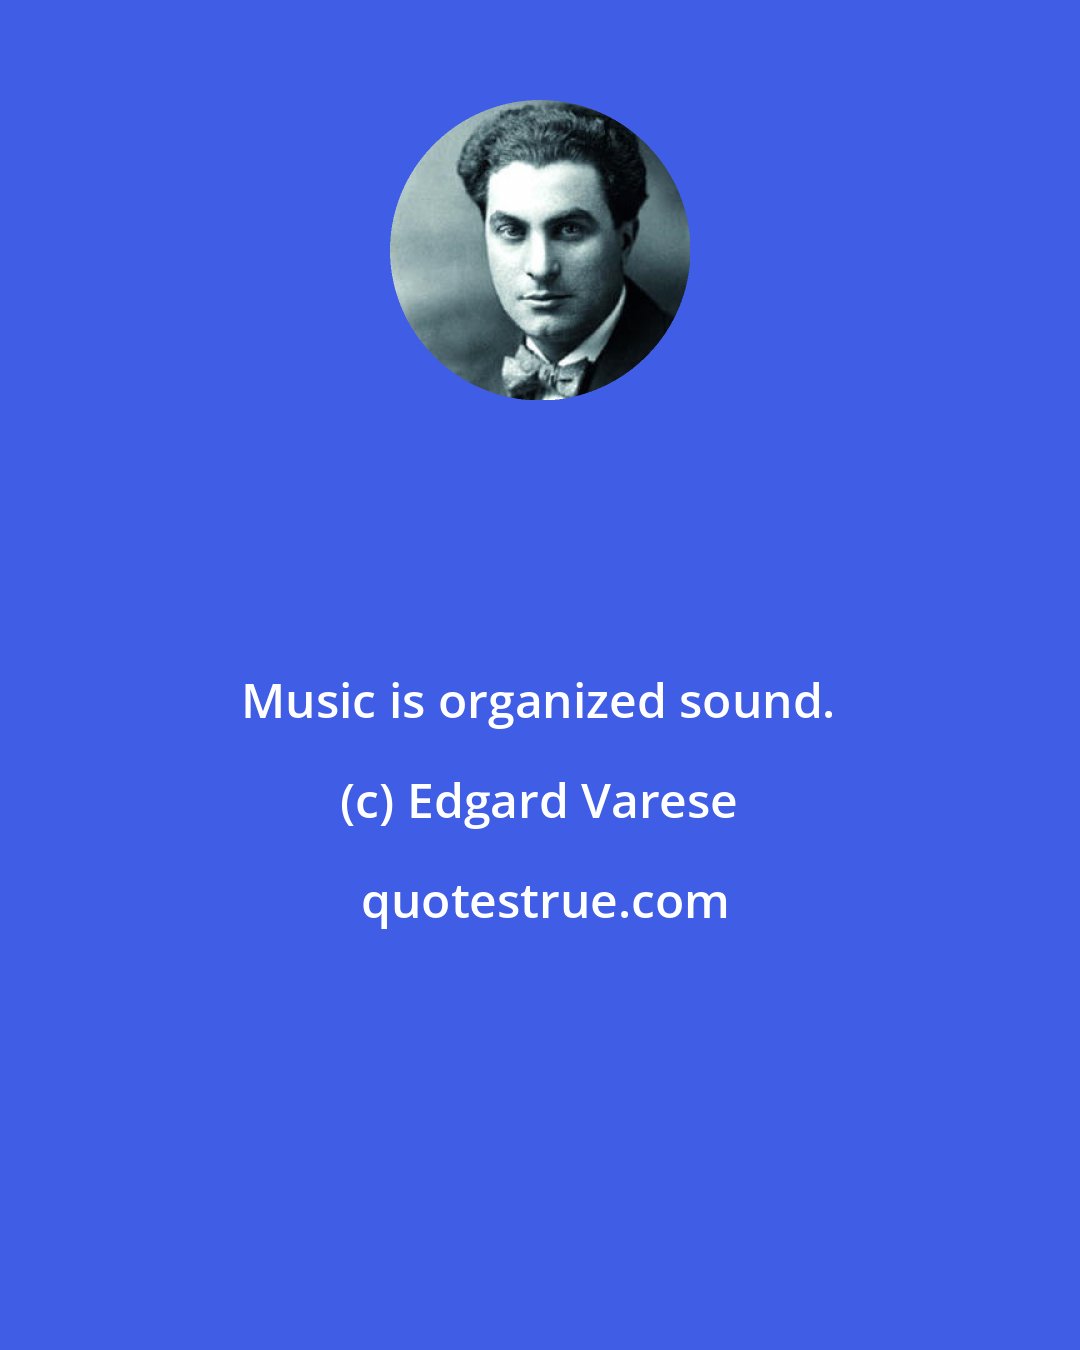 Edgard Varese: Music is organized sound.